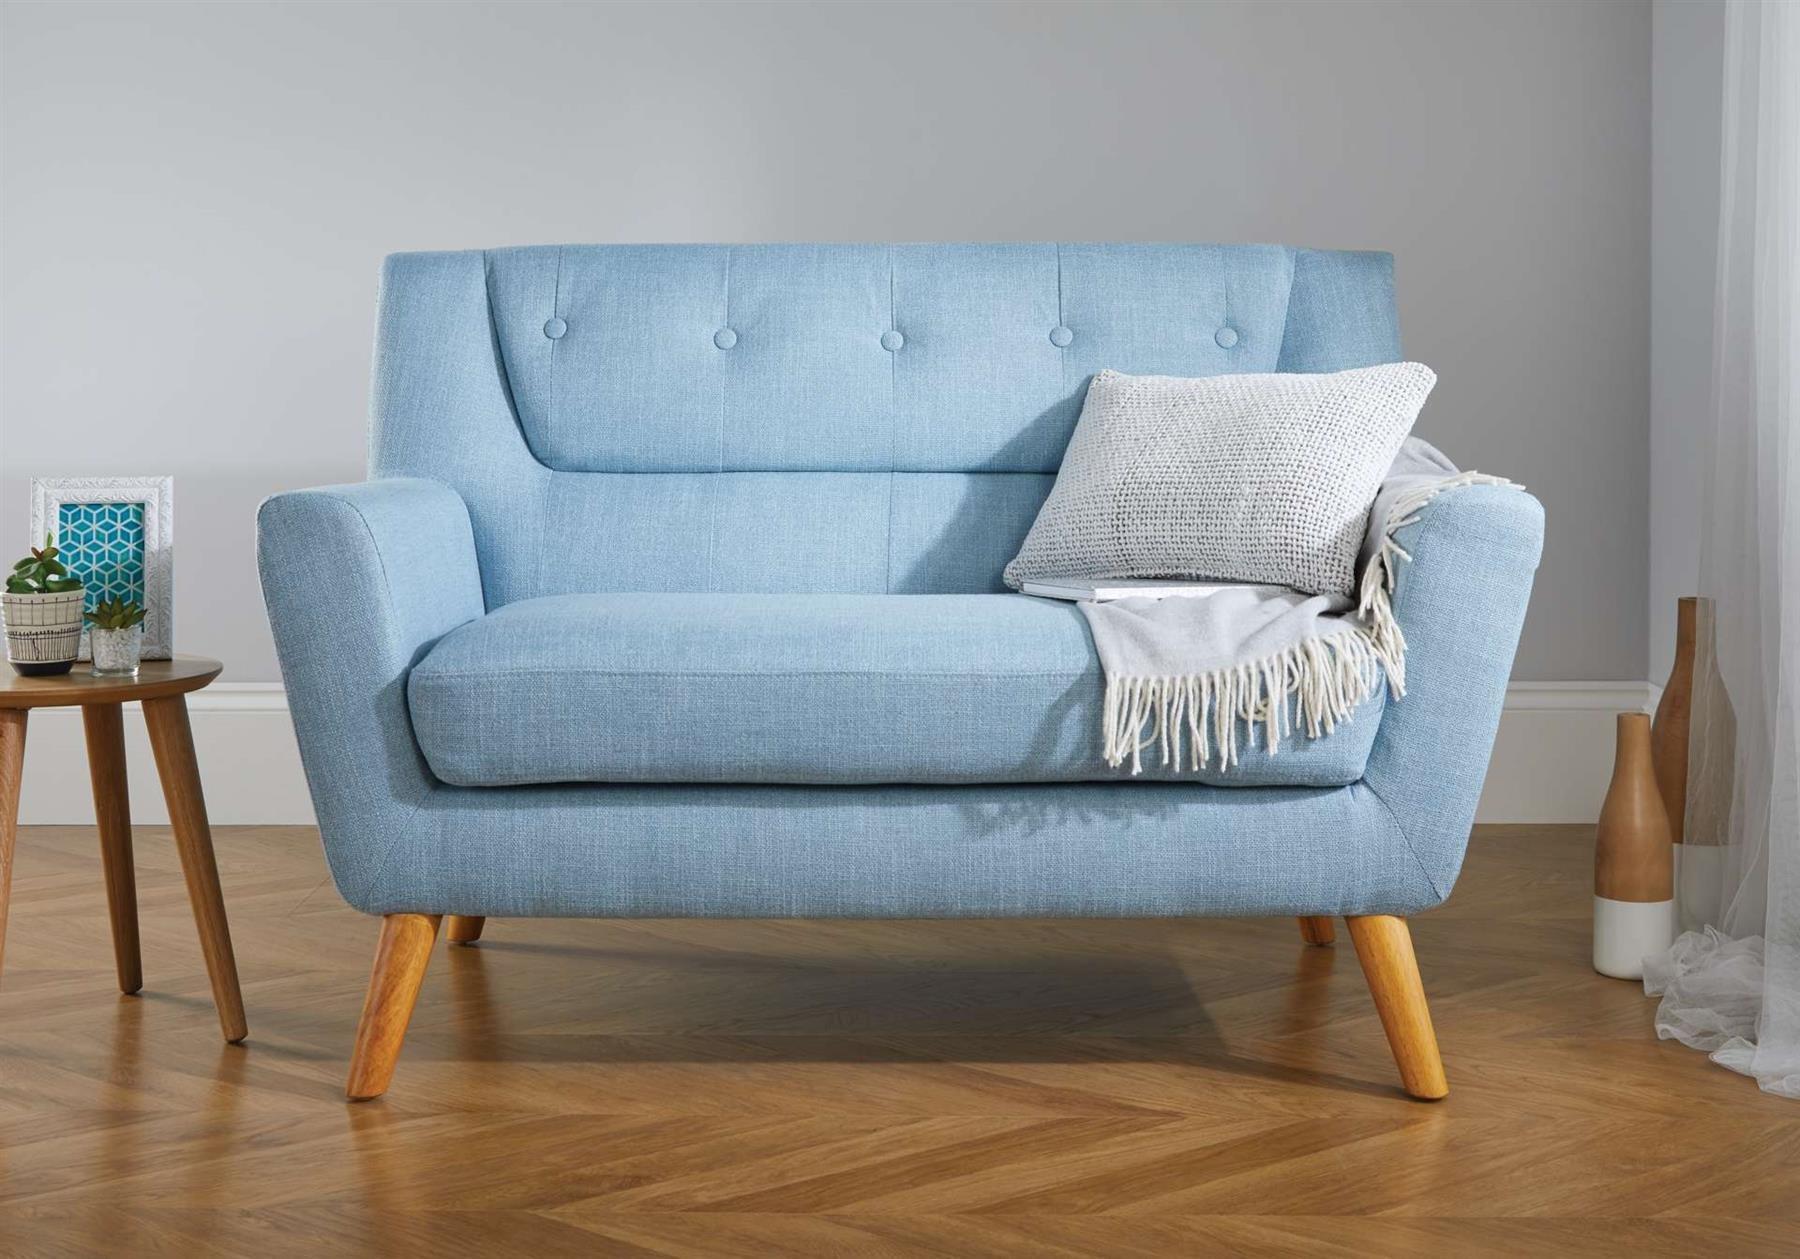 2 Seater Sofa Birlea Lambeth Settee Modern Retro Style Fabric Wood Legs